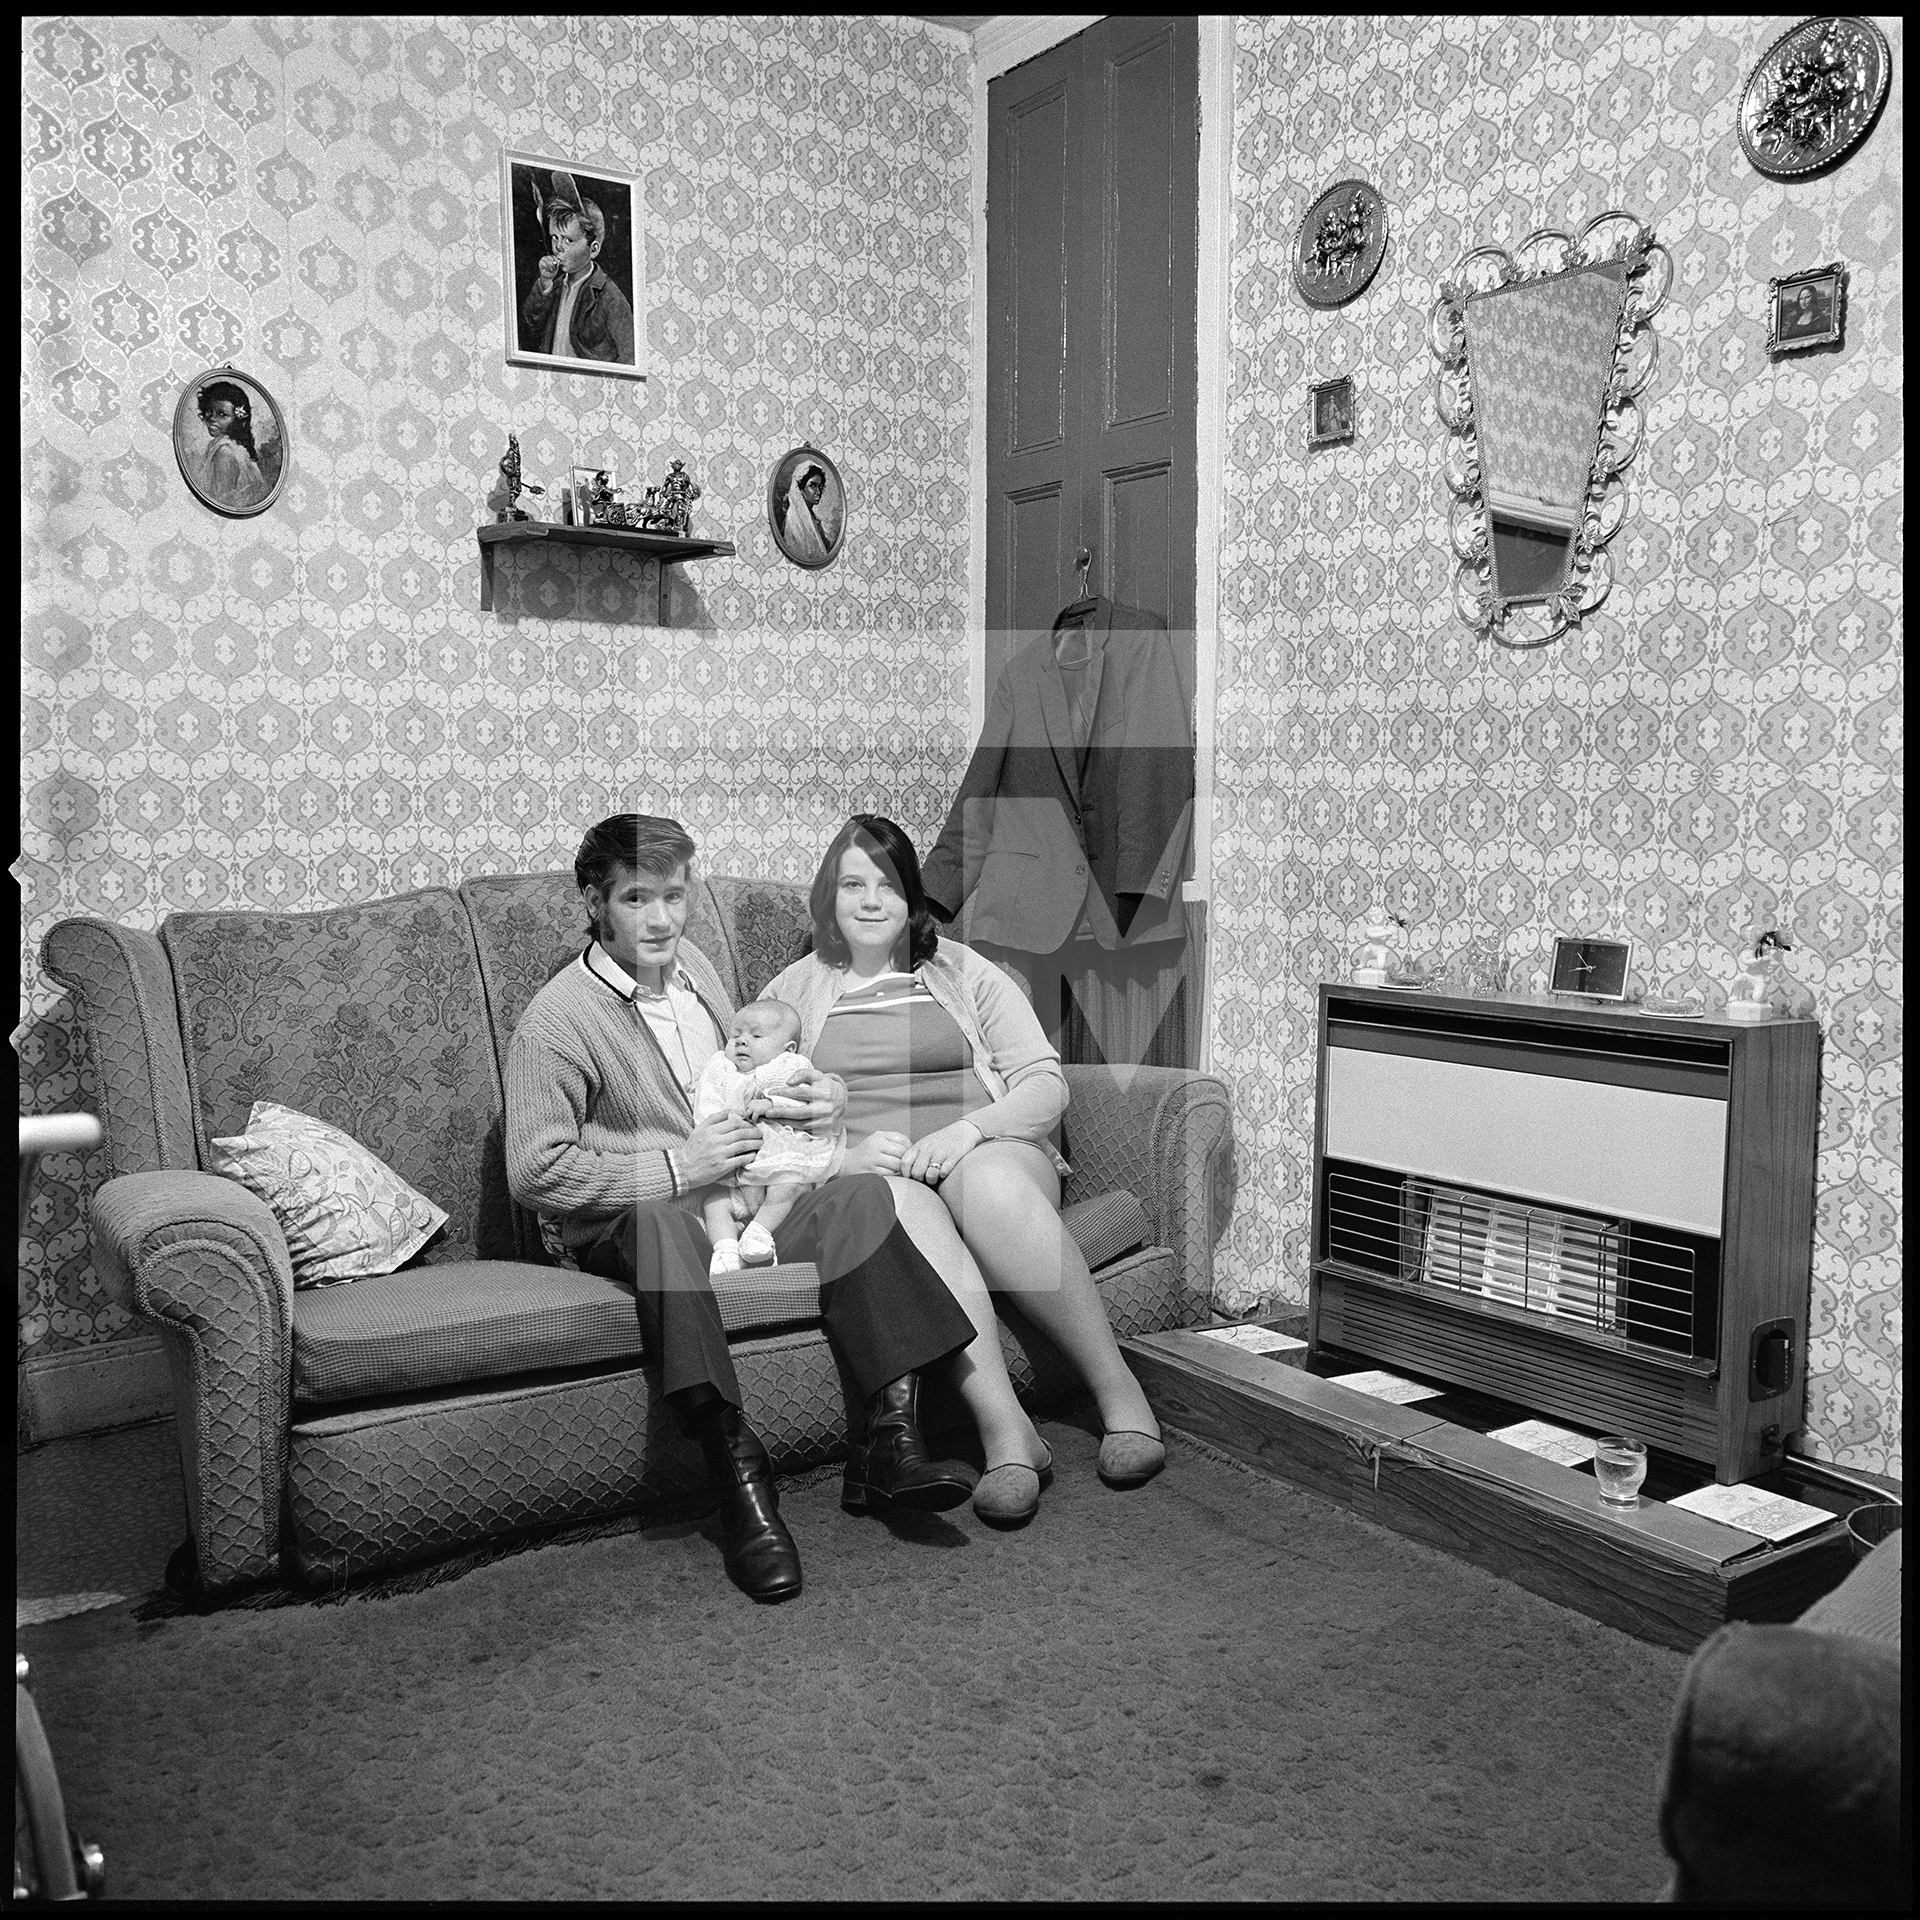 Residents of June Street, Salford. 1973 by Daniel Meadows